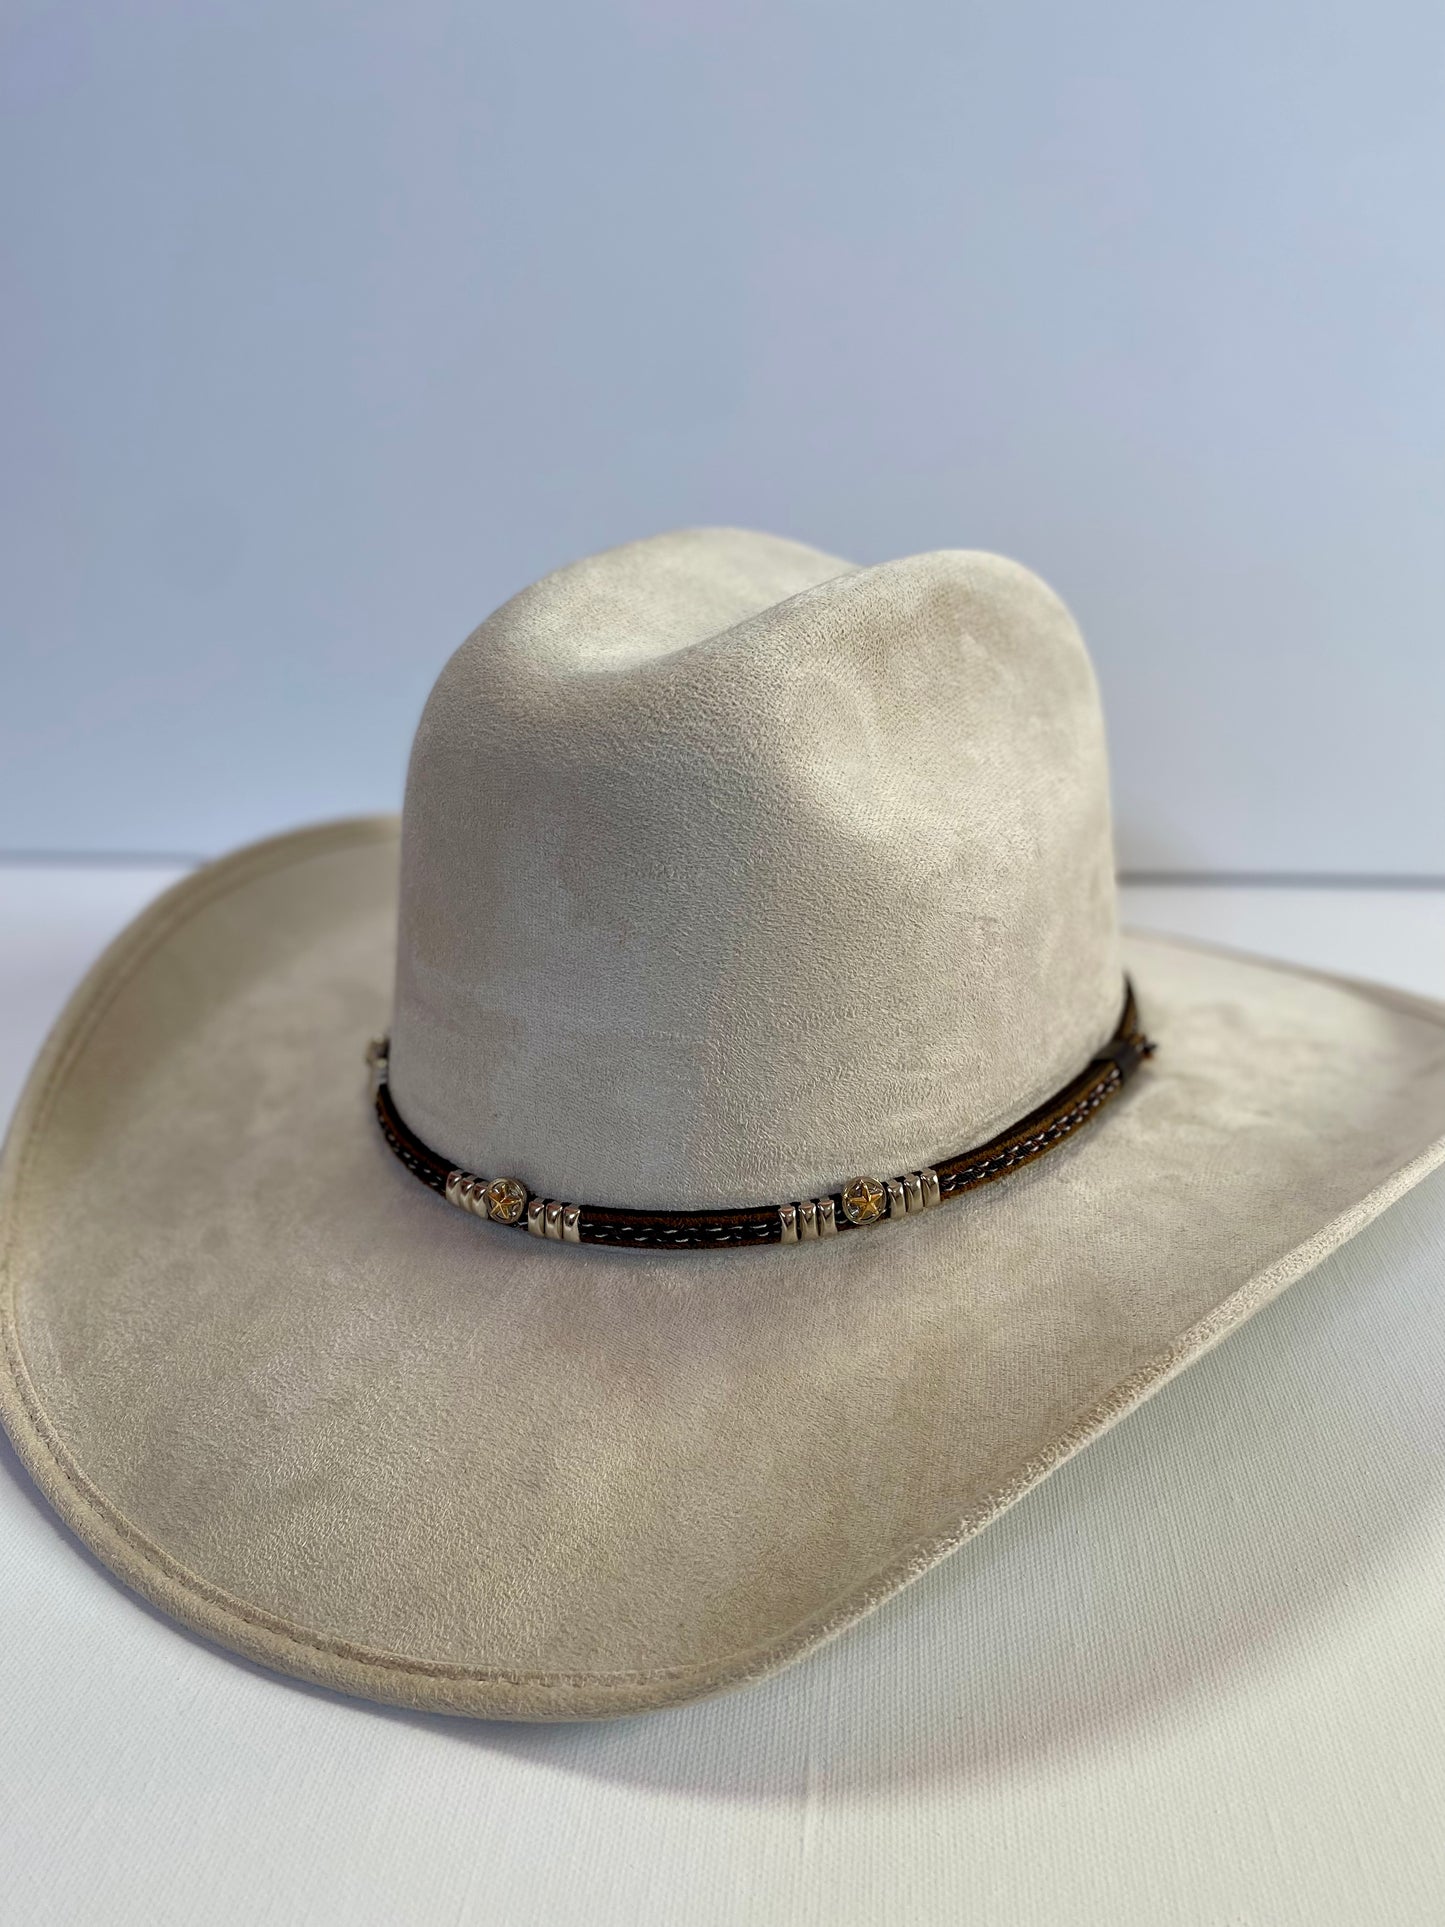 Custom Hat Bands - Texas Star